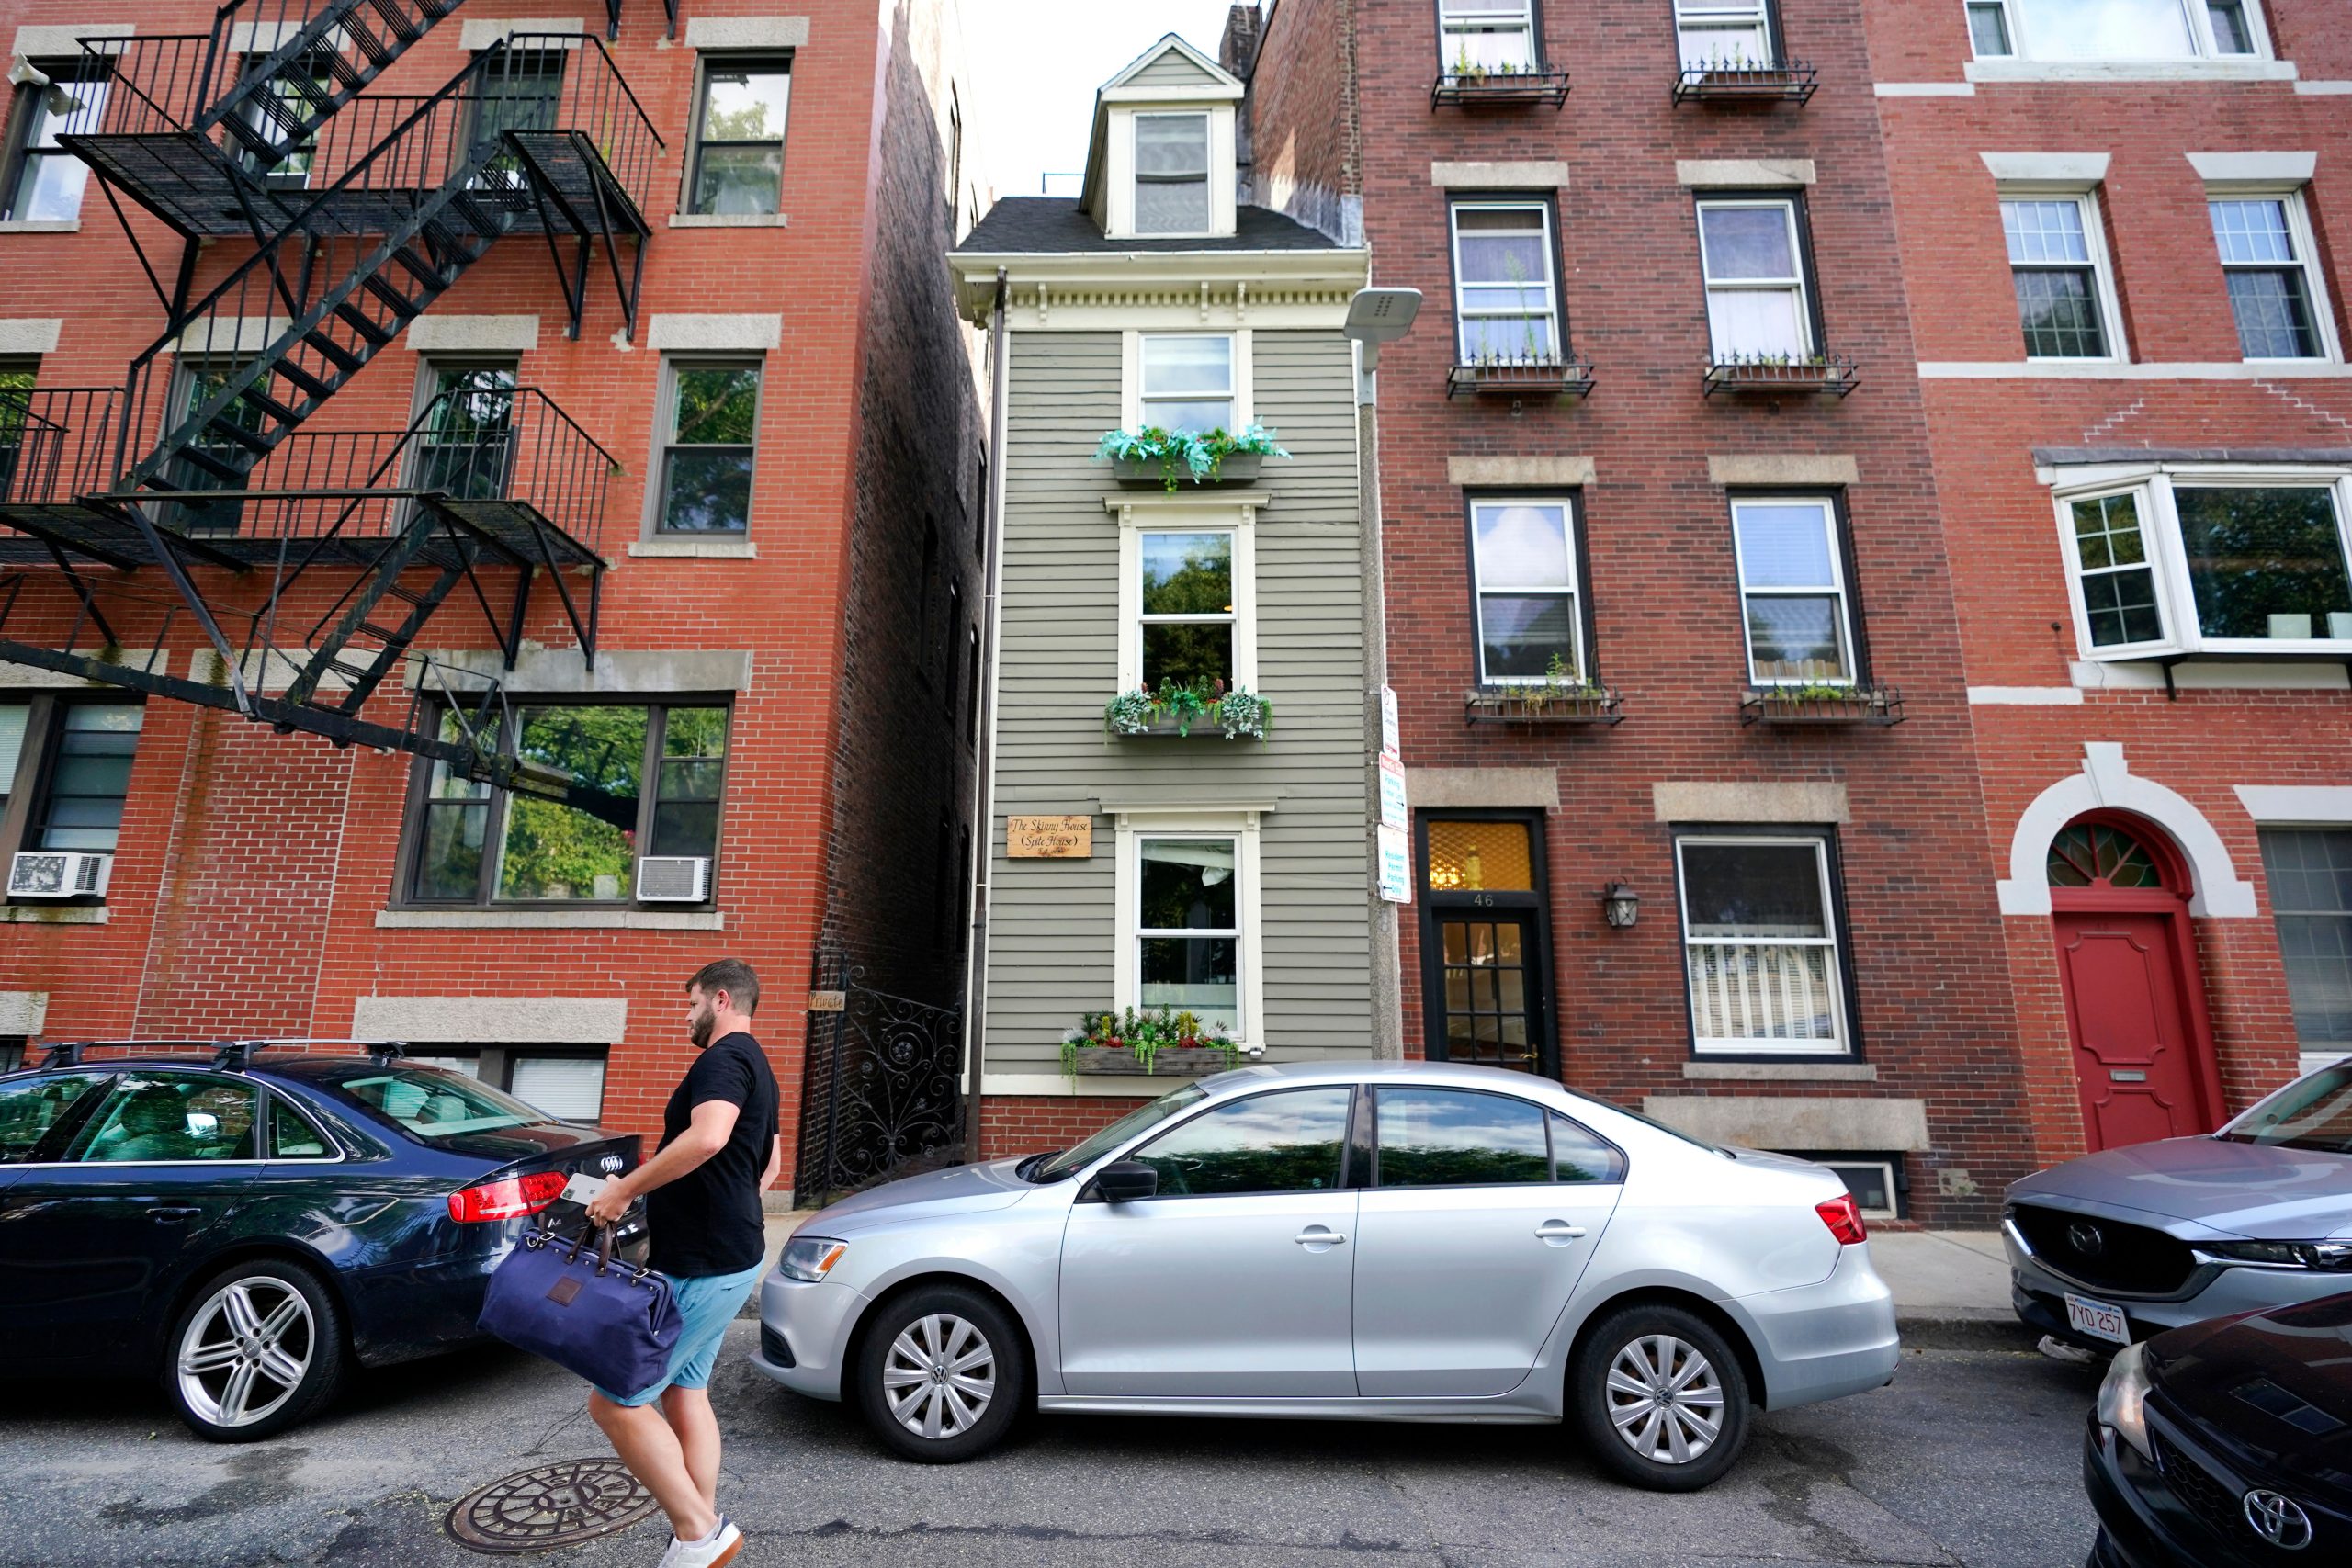 Boston’s famed Skinny House back on market, listed for $1.2M